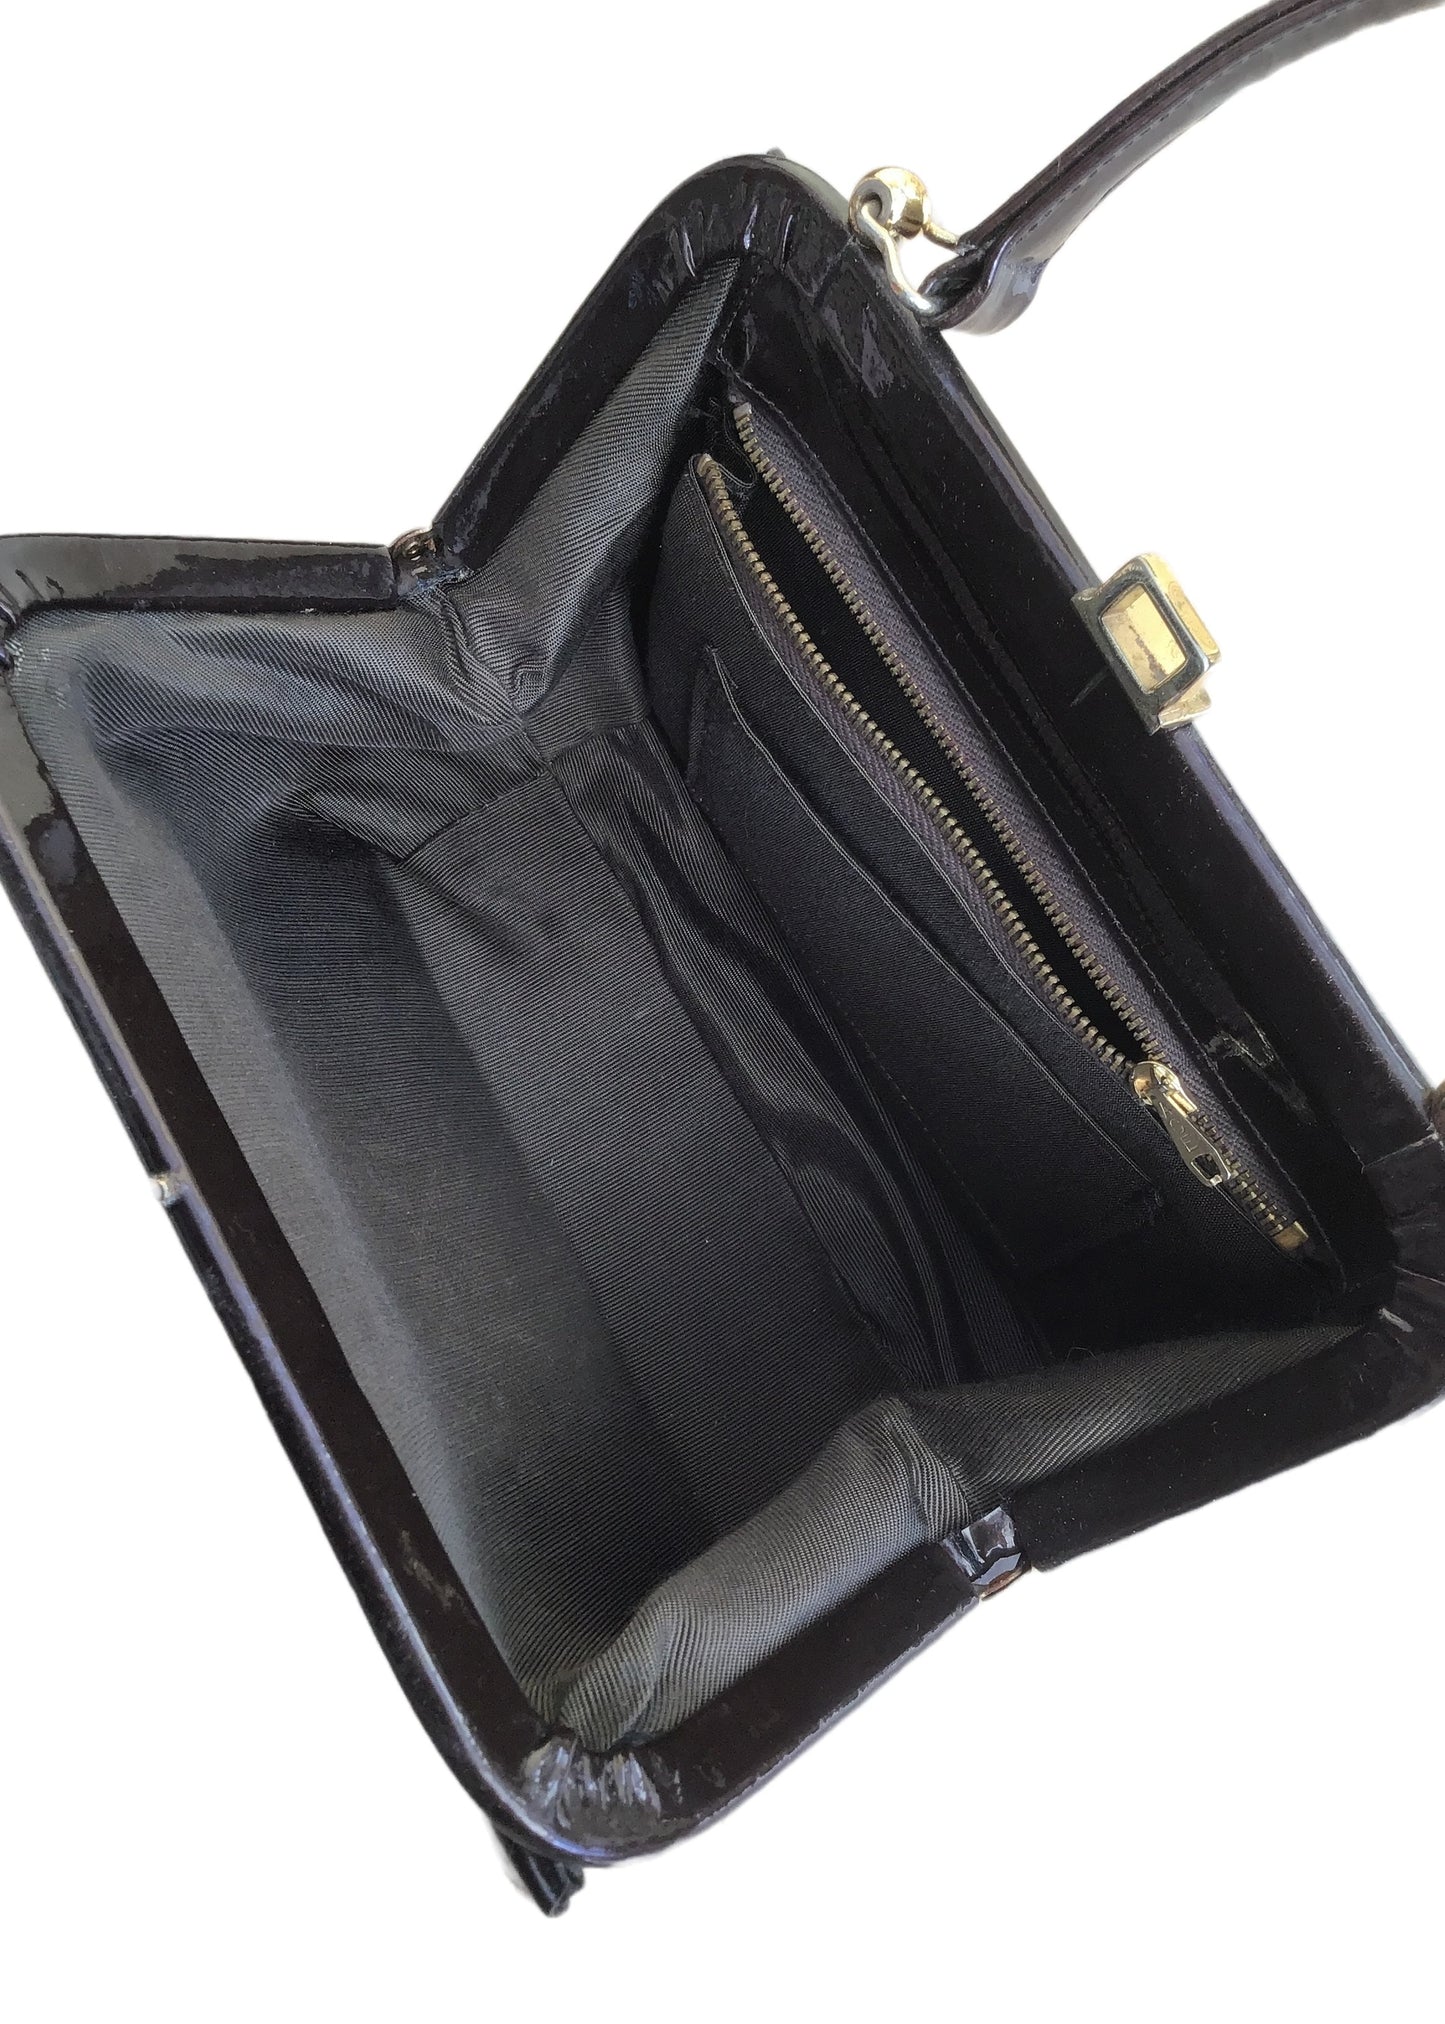 Vintage Brown Patent Top Handle Handbag Bag